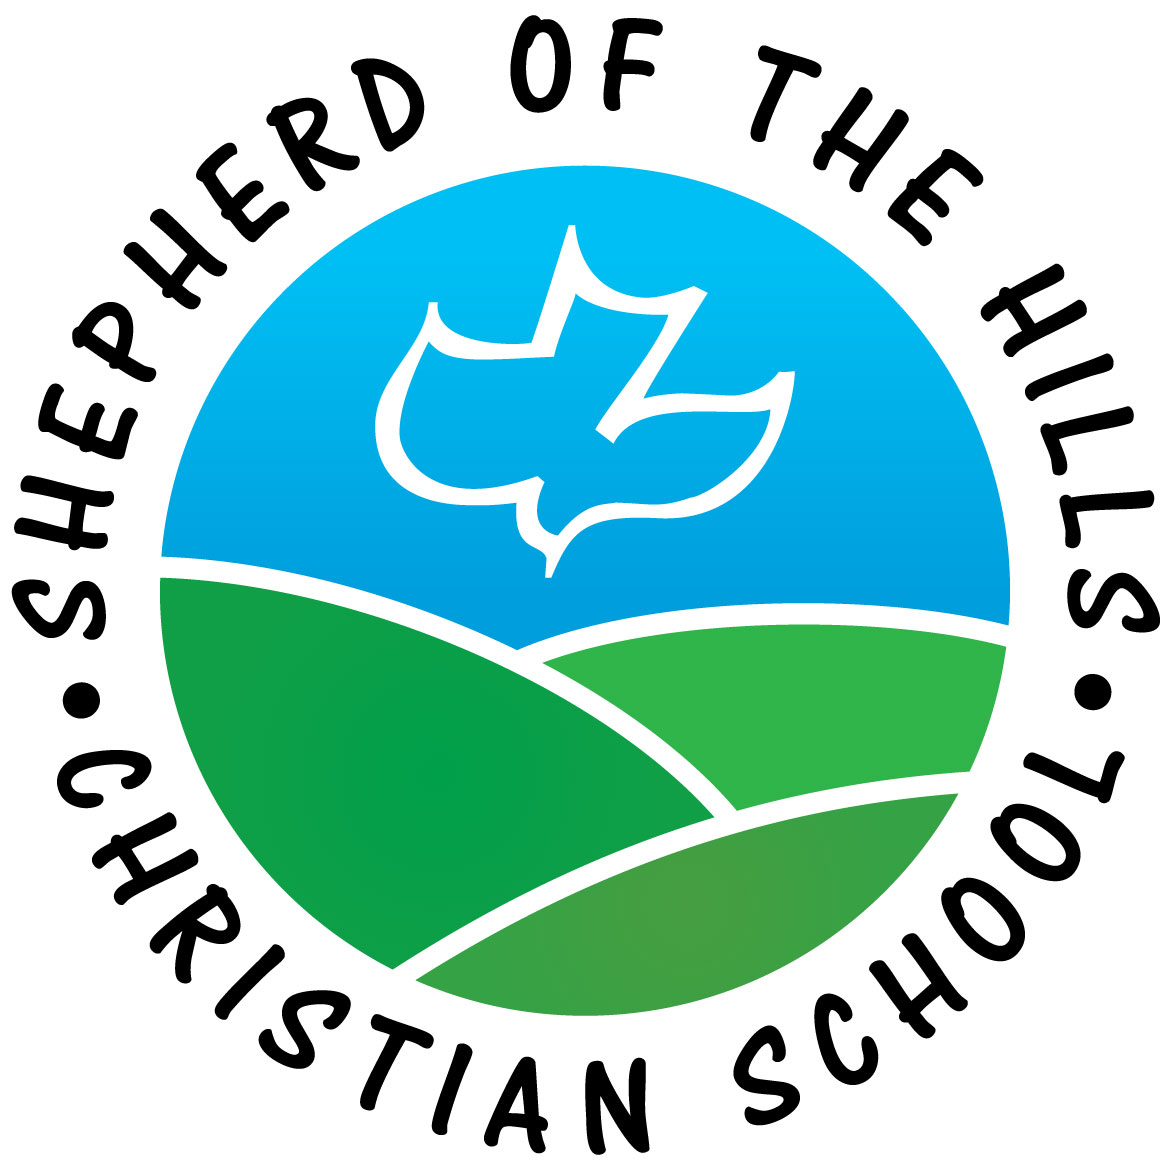 Shepherd of the Hills Christian School